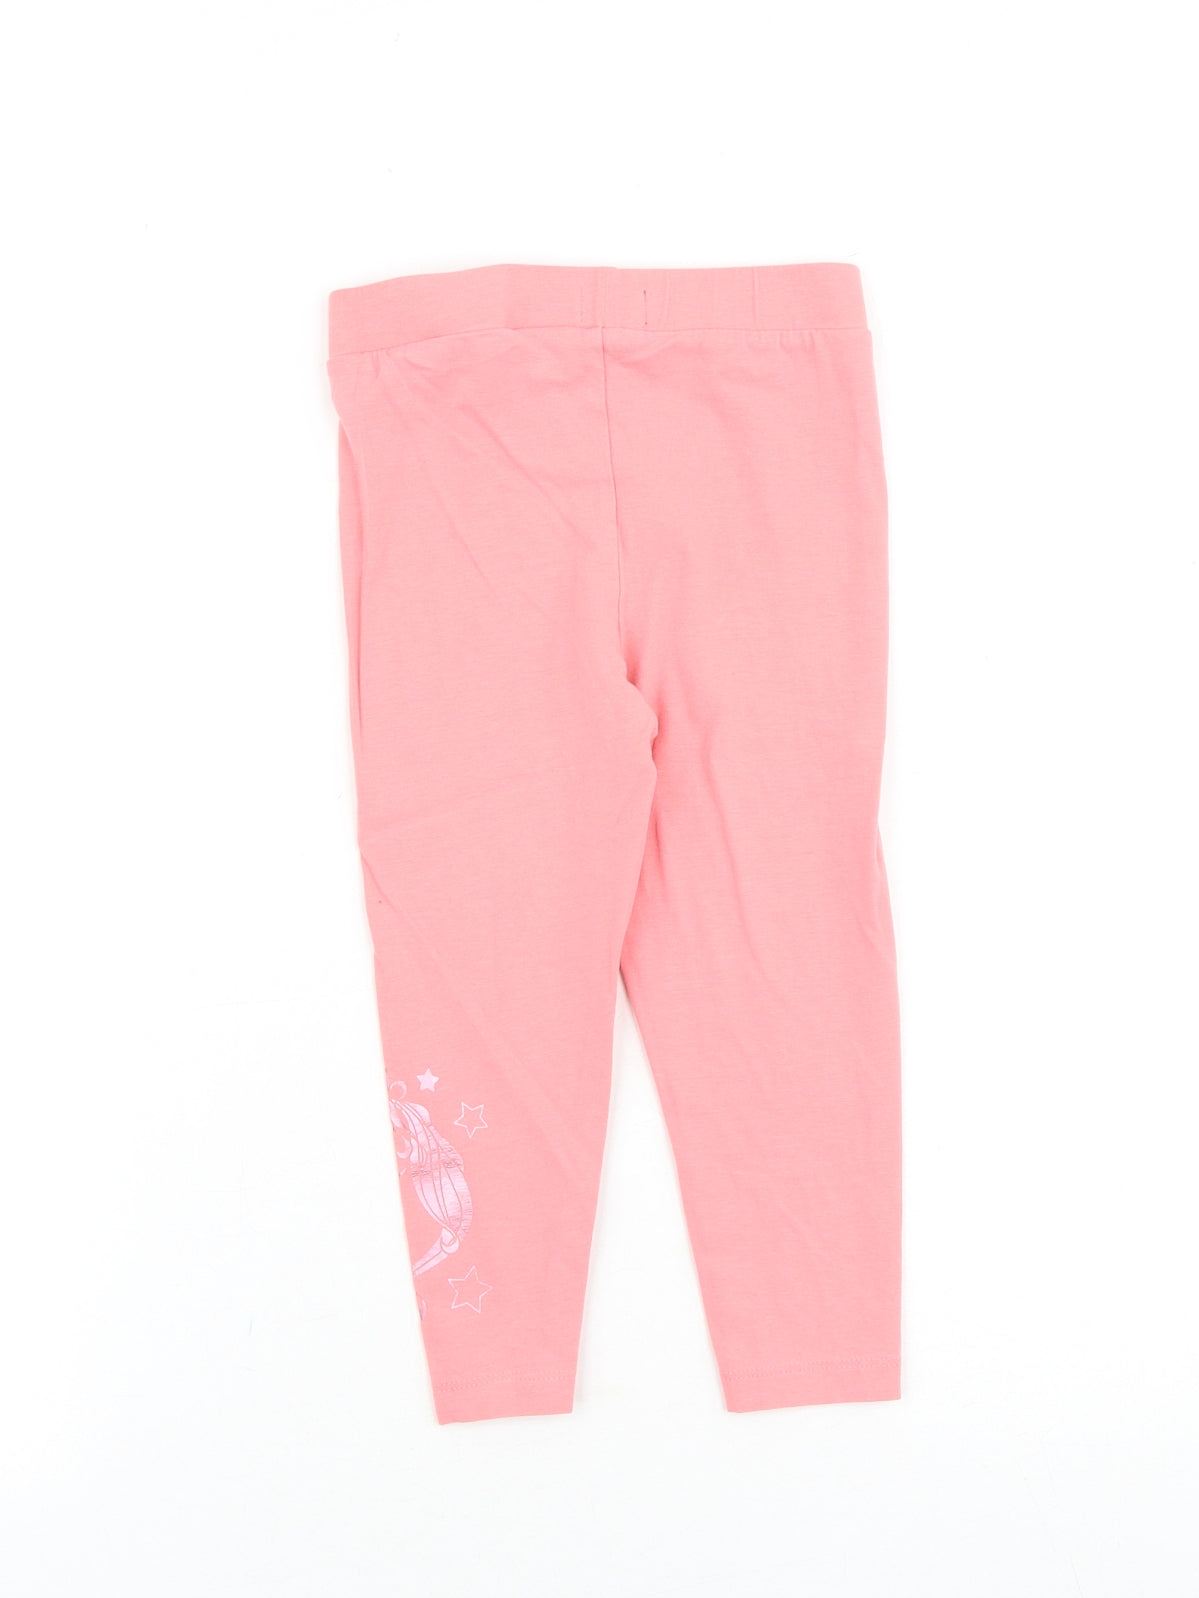 Studio Girls Pink Cotton Jogger Trousers Size 3-4 Years Regular Pullover - Unicorn Leggings